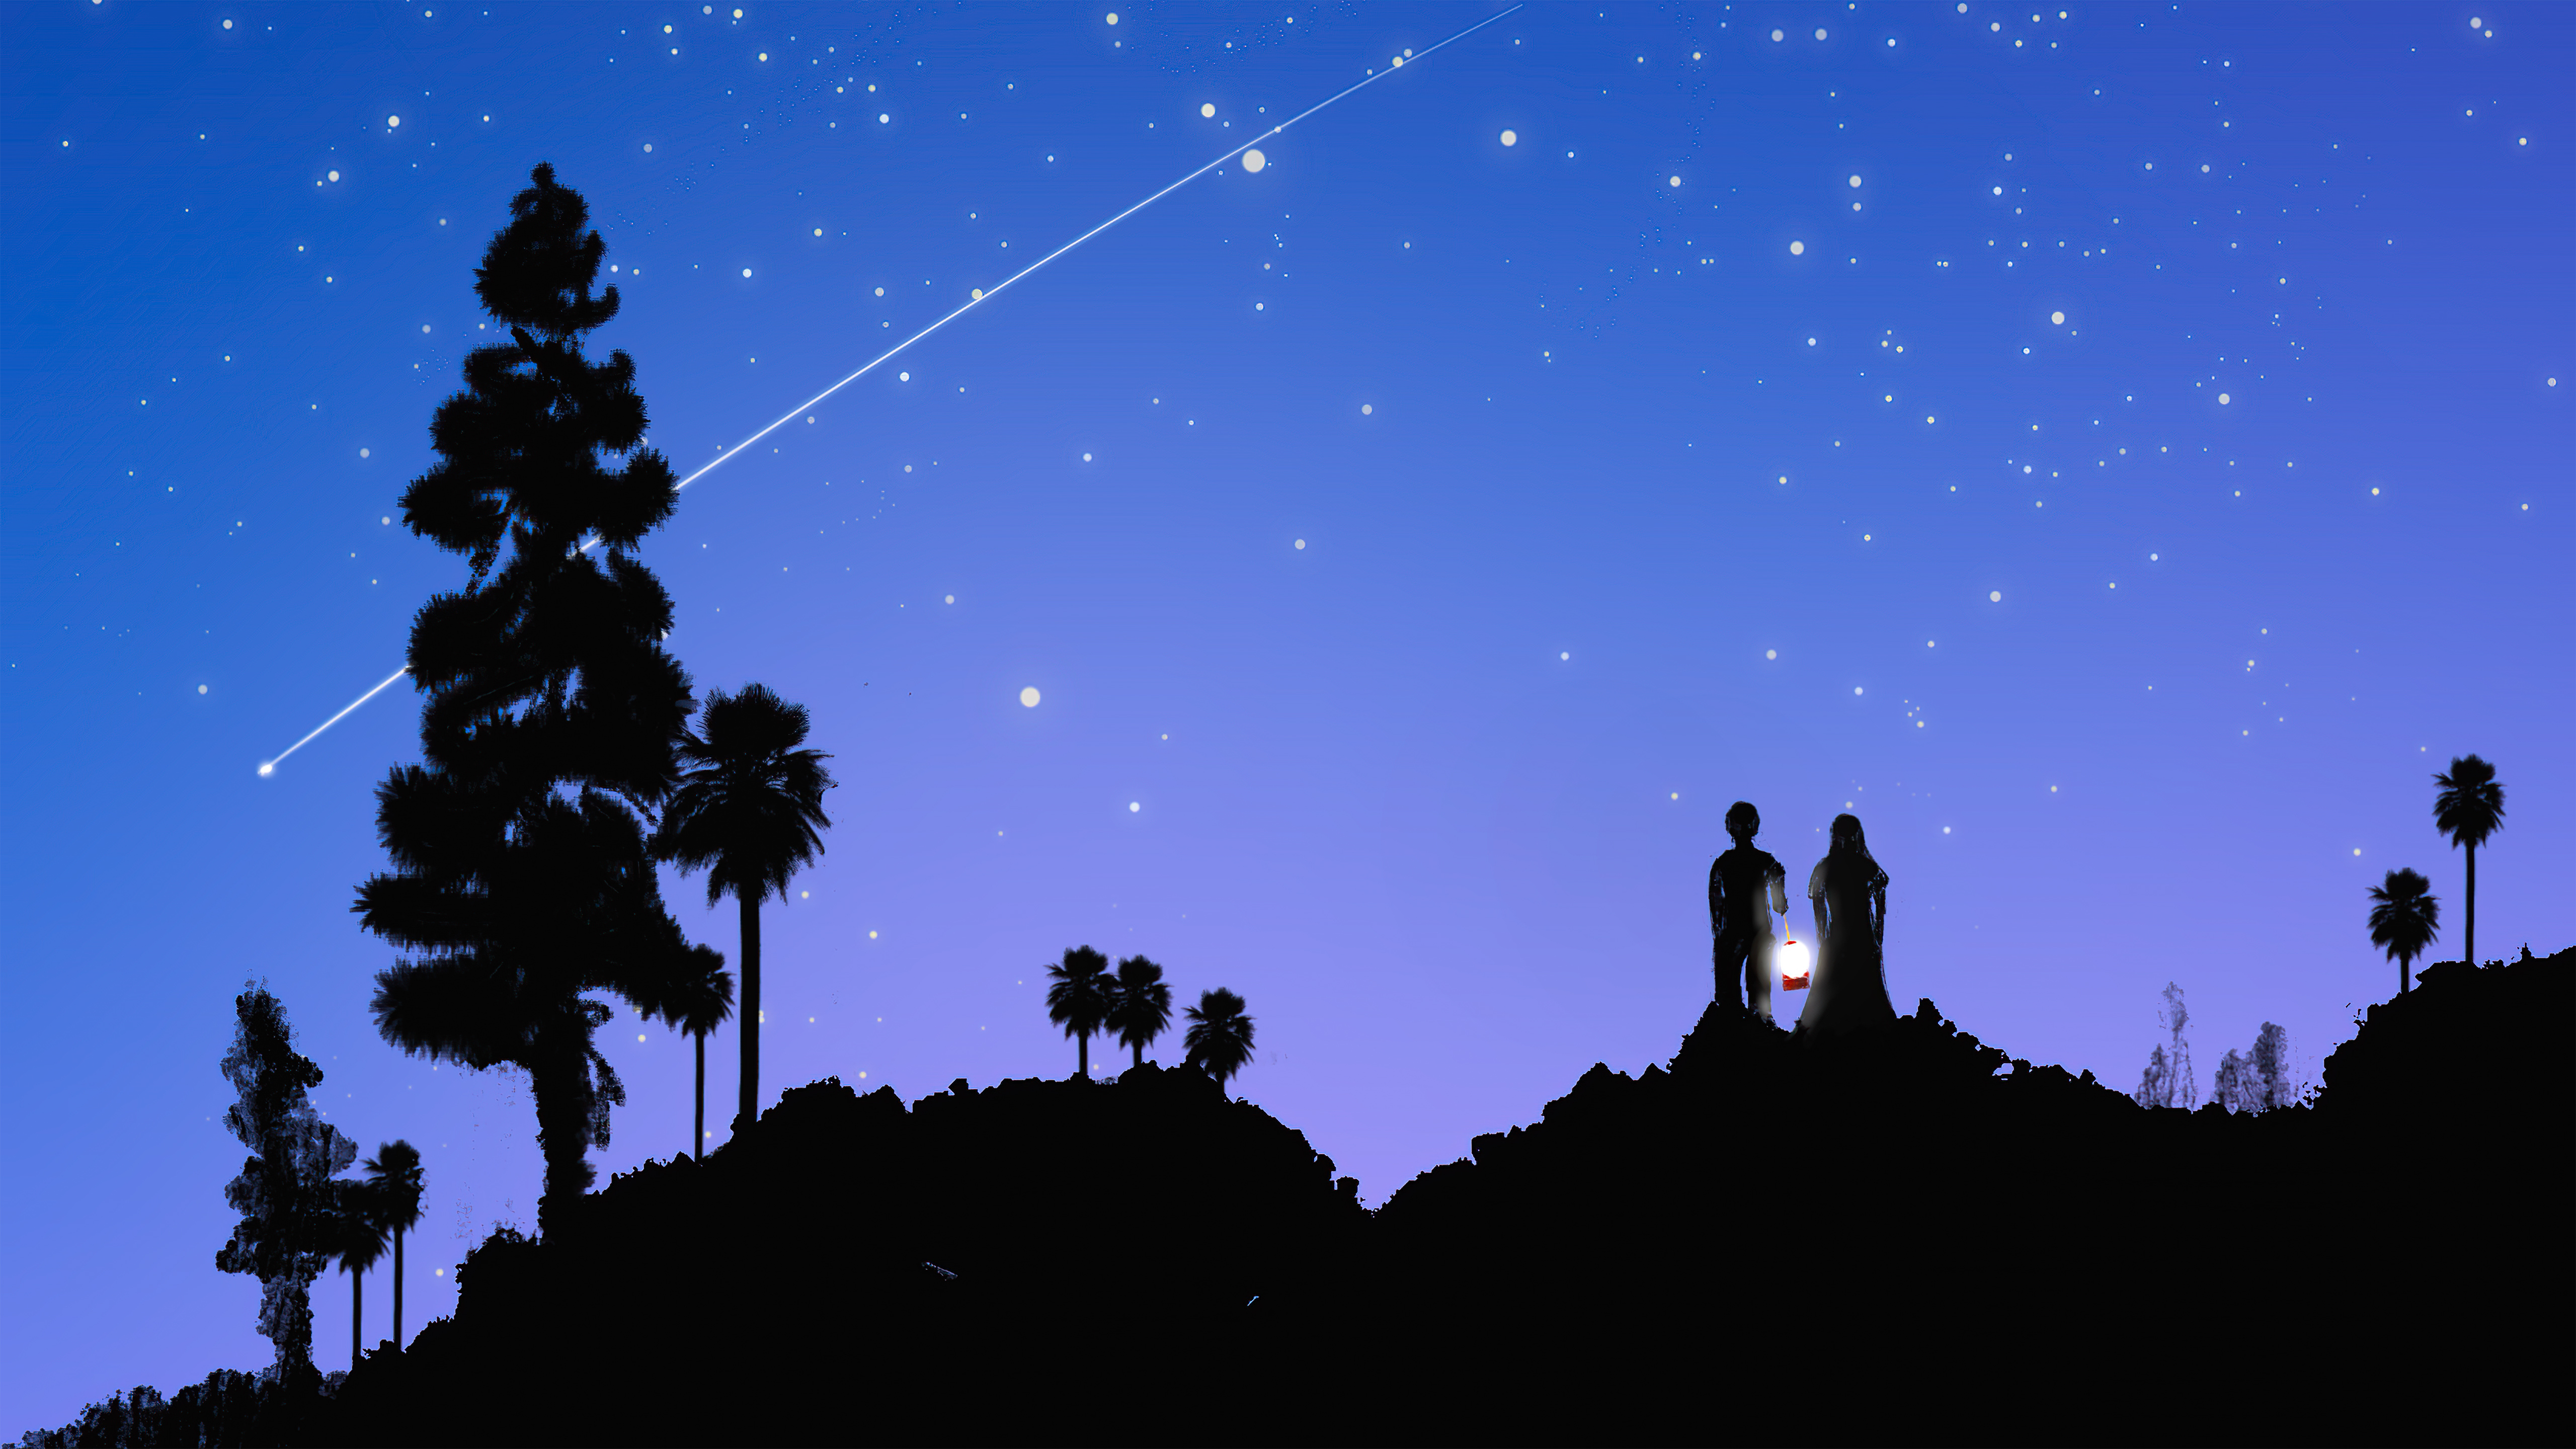 couple-at-starrty-night-watching-stars-and-meteorite-5k-ge.jpg